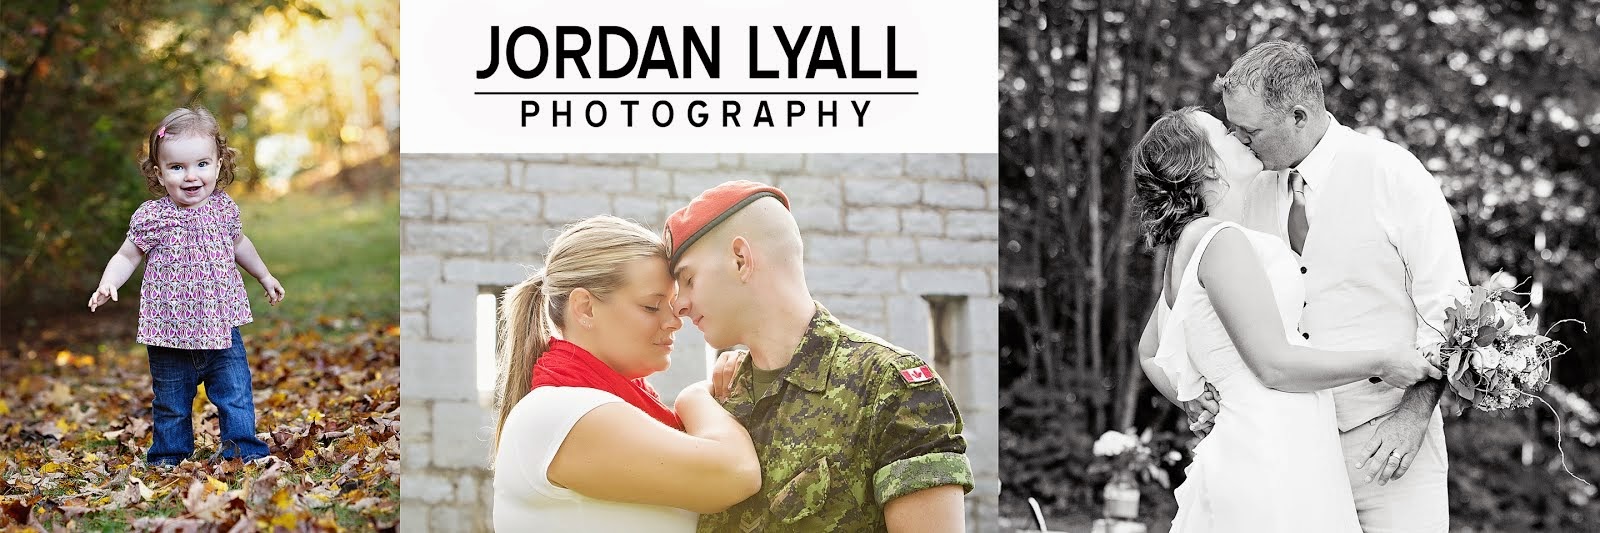 Jordan Lyall Photography.  Beautiful Moments deserve Beautiful Photographs.